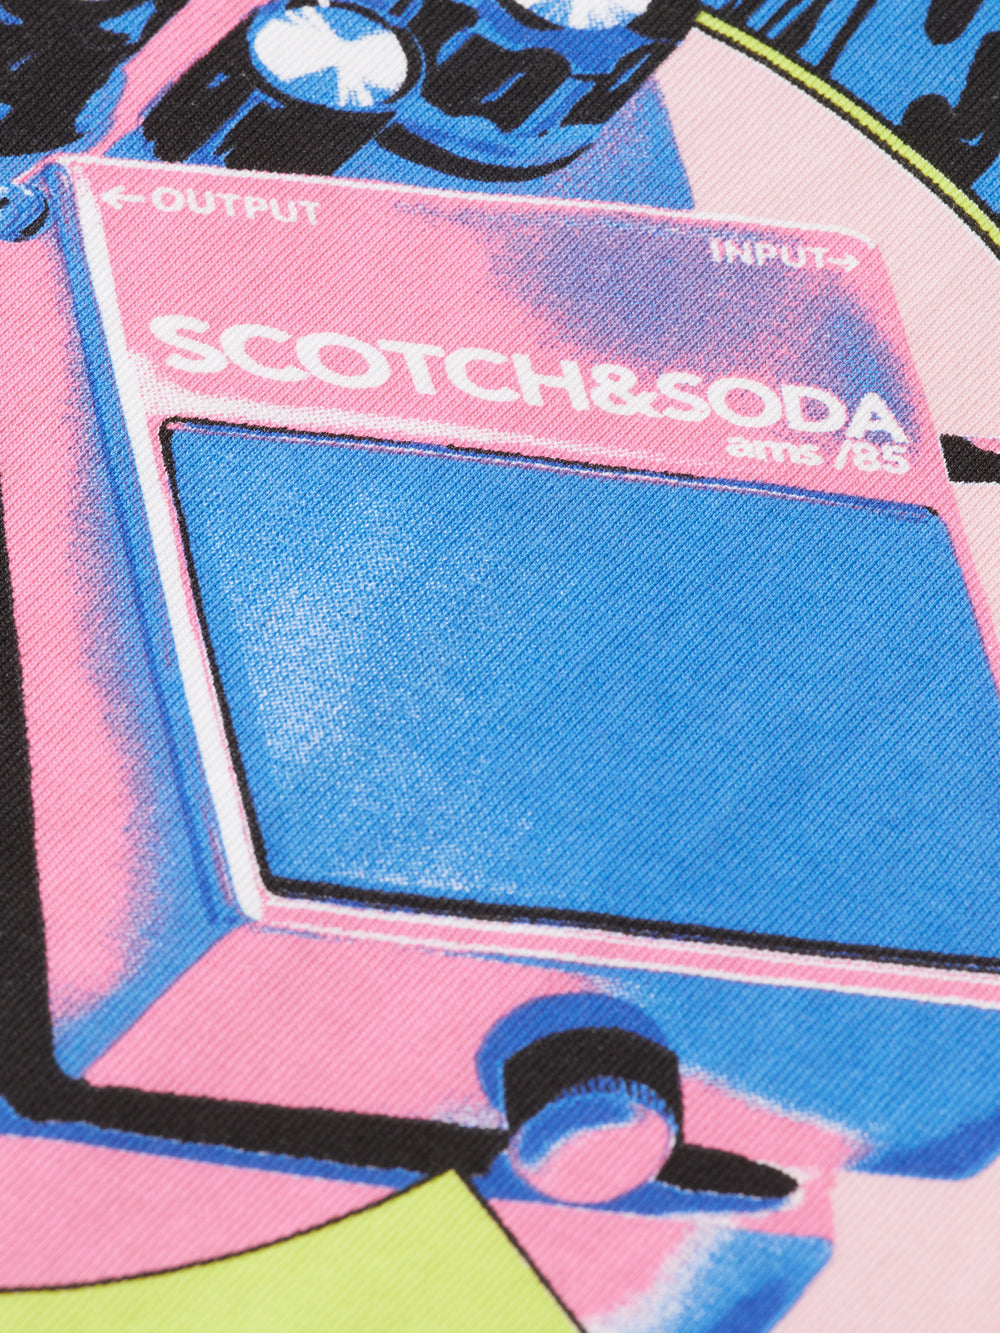 Music themed loose-fit t-shirt - Scotch & Soda NZ